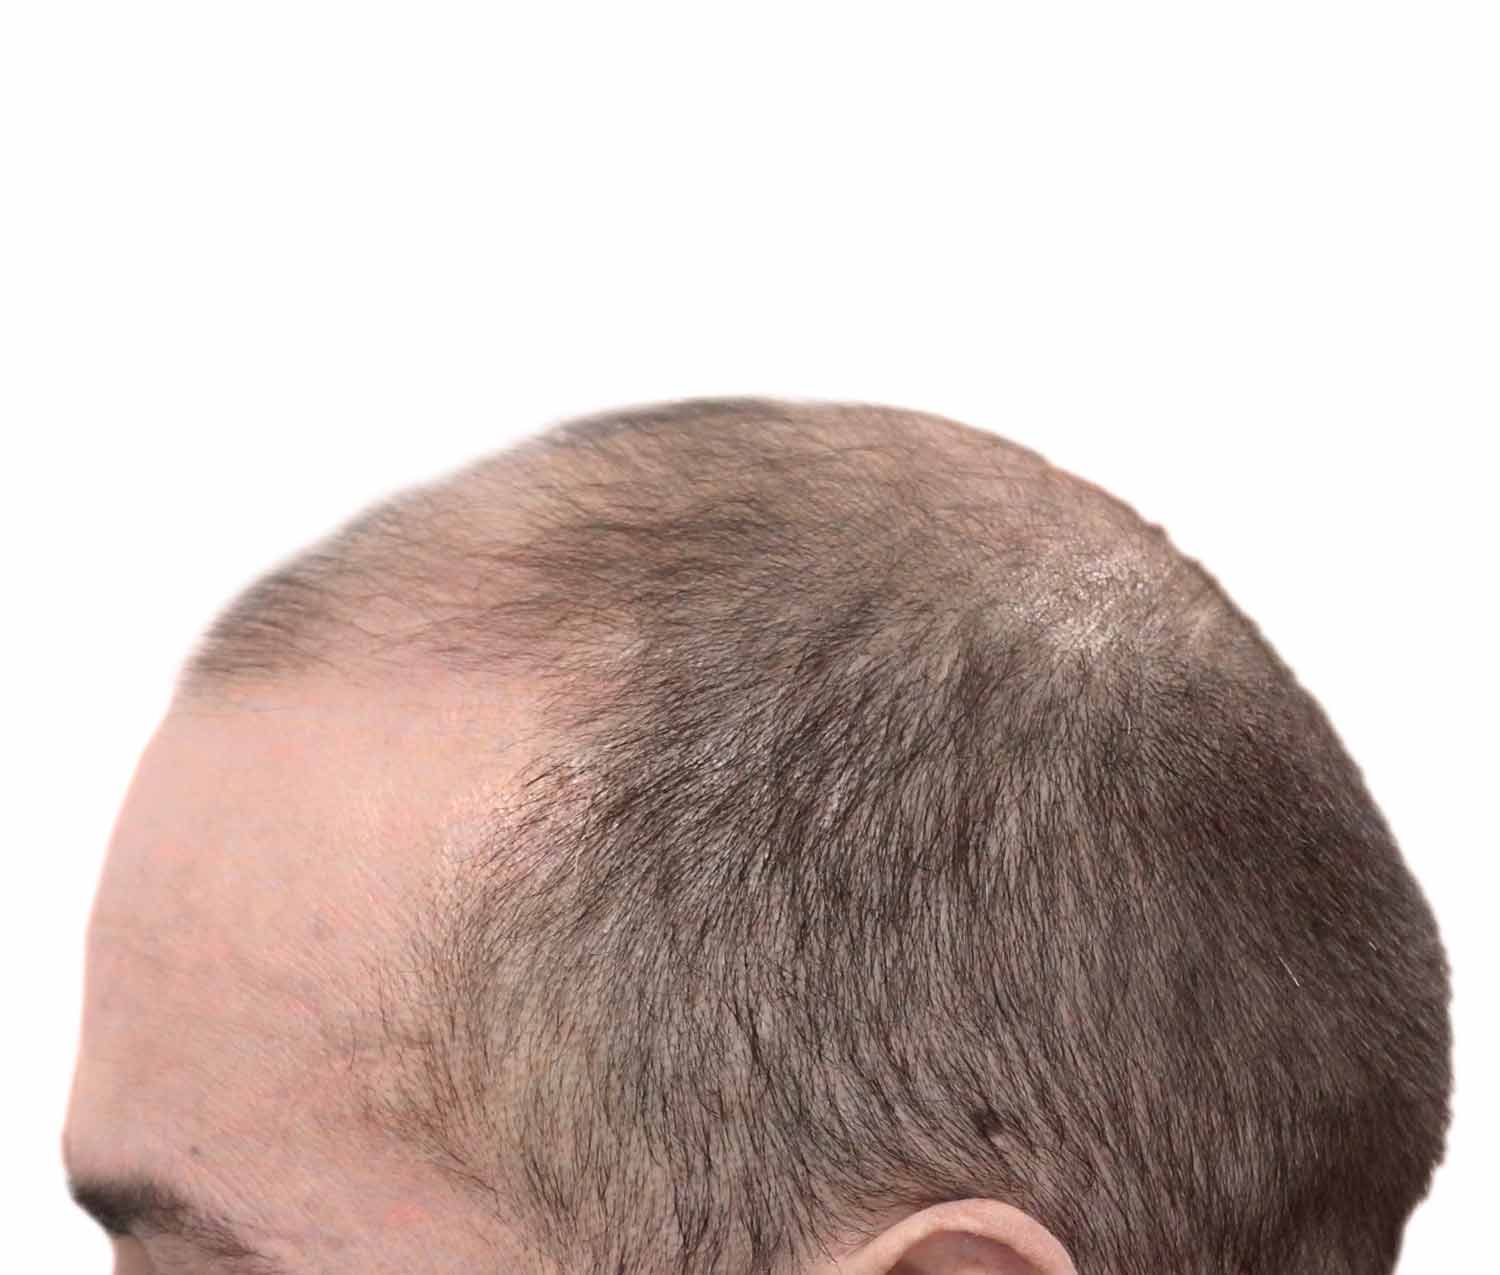 un primer plano de la cabeza de un hombre calvo.